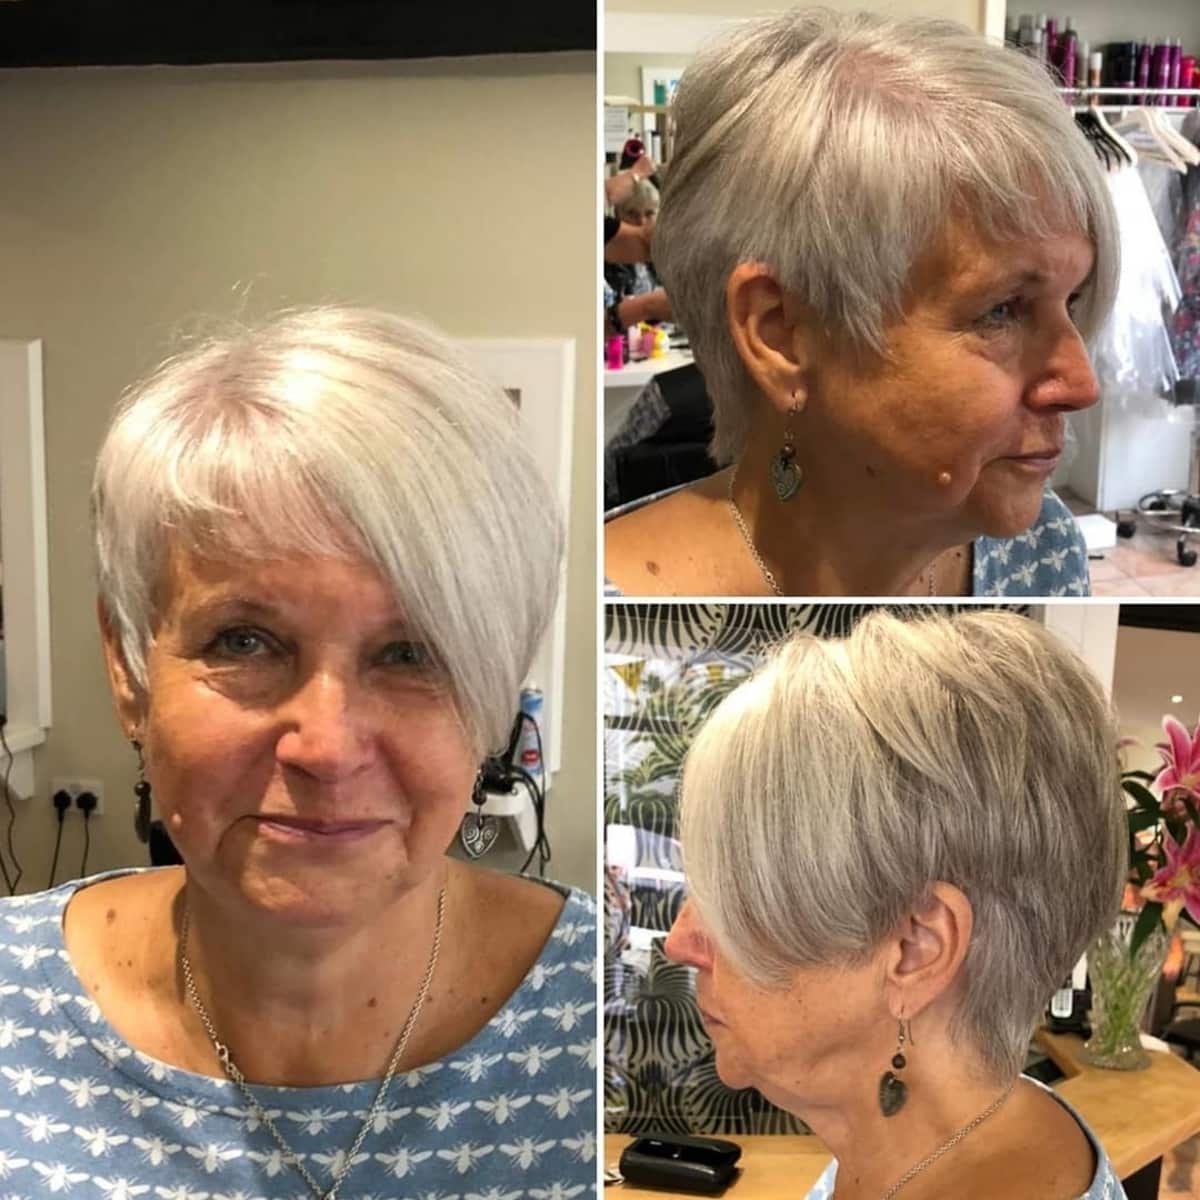 Asymmetrical Layered Haircut for women in their 60s with Thin Hair